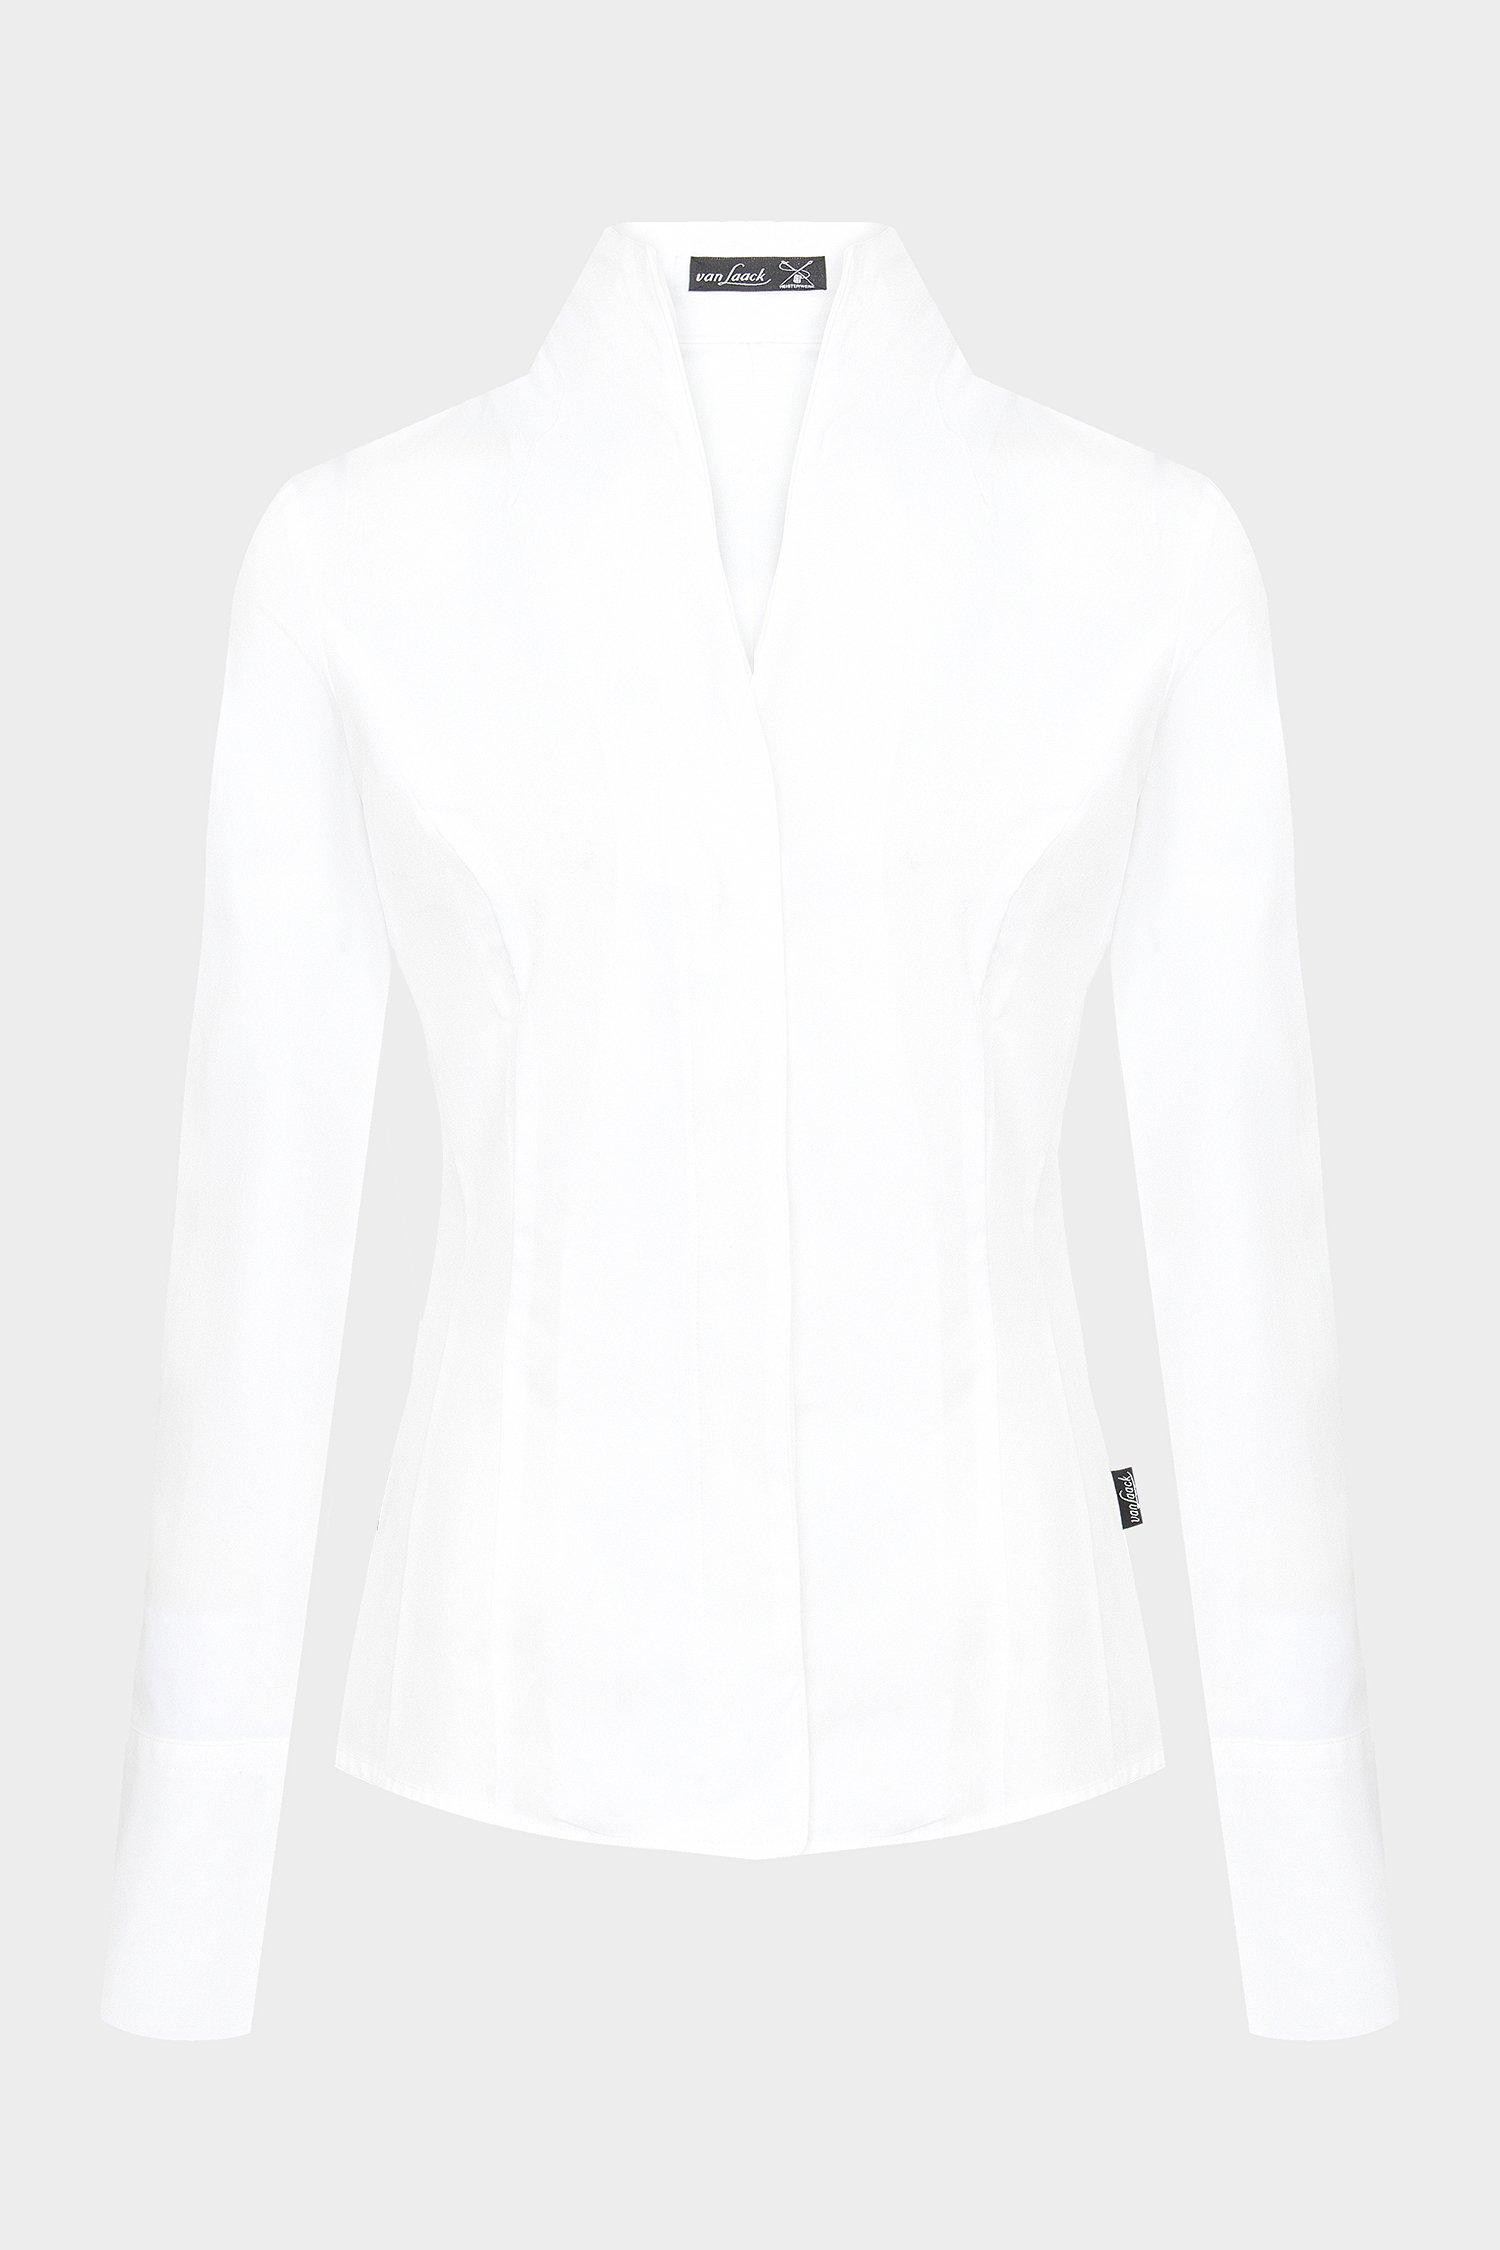 блузка ALICE FPBV белый ALICE-FPBV_130648_000 ,photo 1